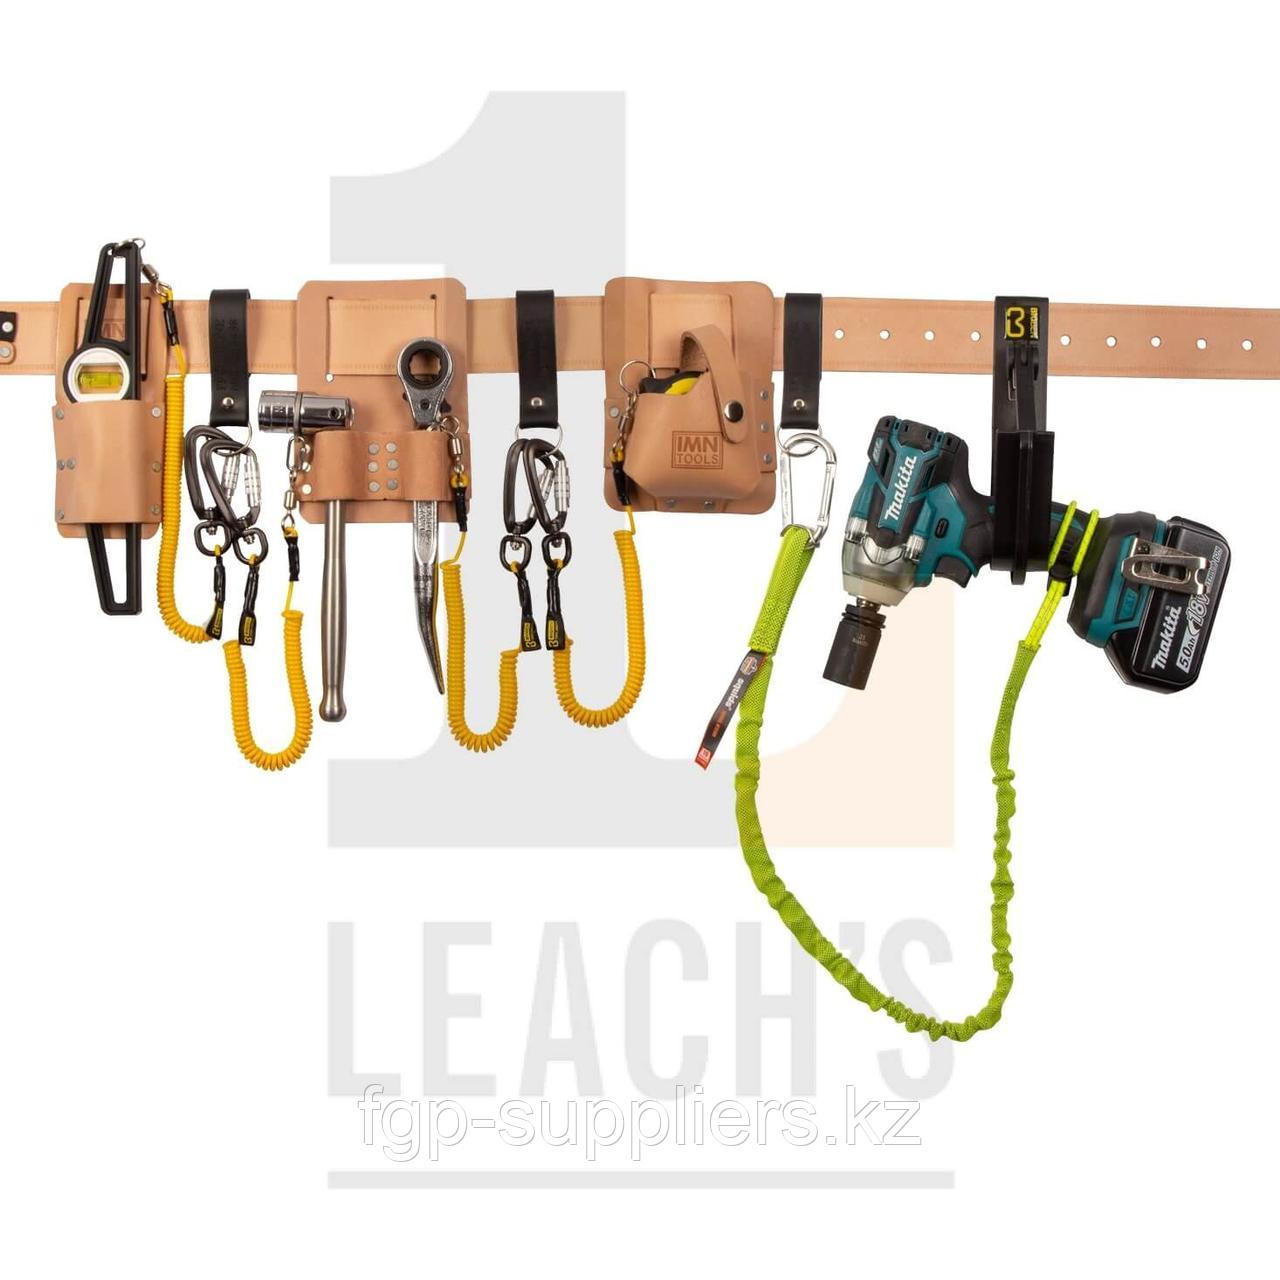 IMN Contractors Leather Tethered Tool & Belt Set c/w Gorilla Safety Hook & Makita Impact Wrench / IMN кожаный комплект инструментов на страховочном